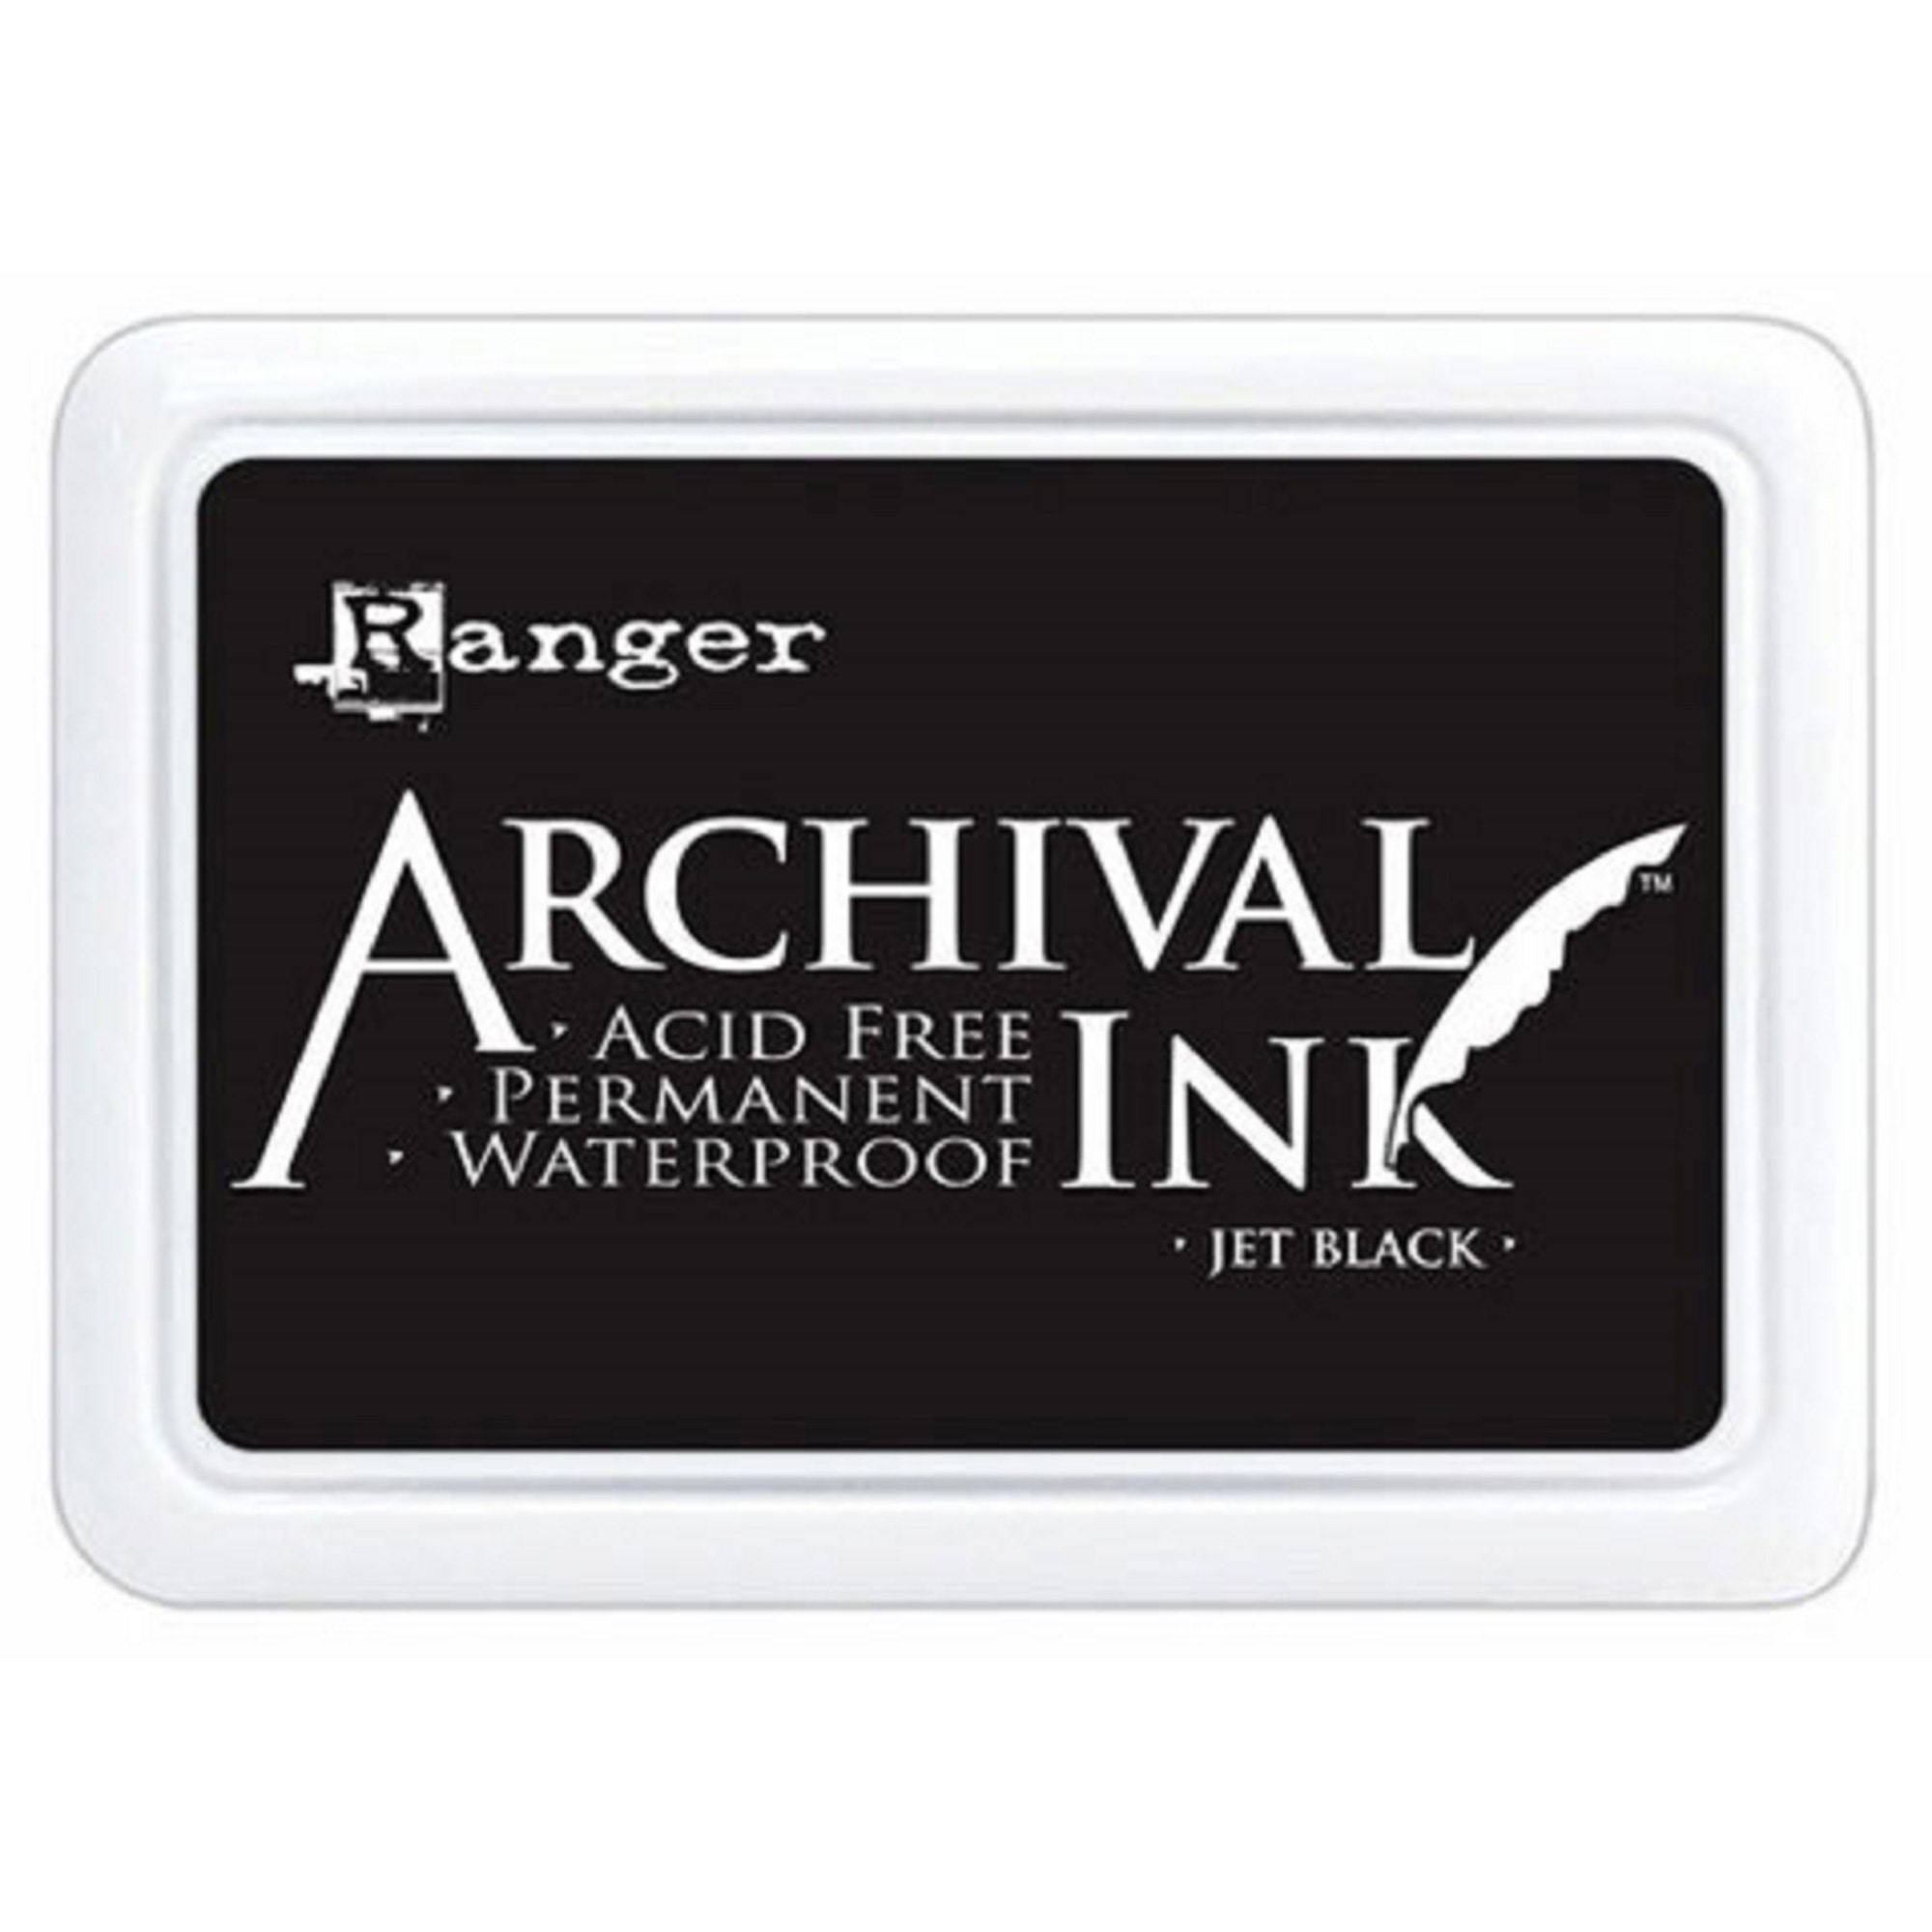 Ranger Jumbo Archival Ink Pad - Sepia